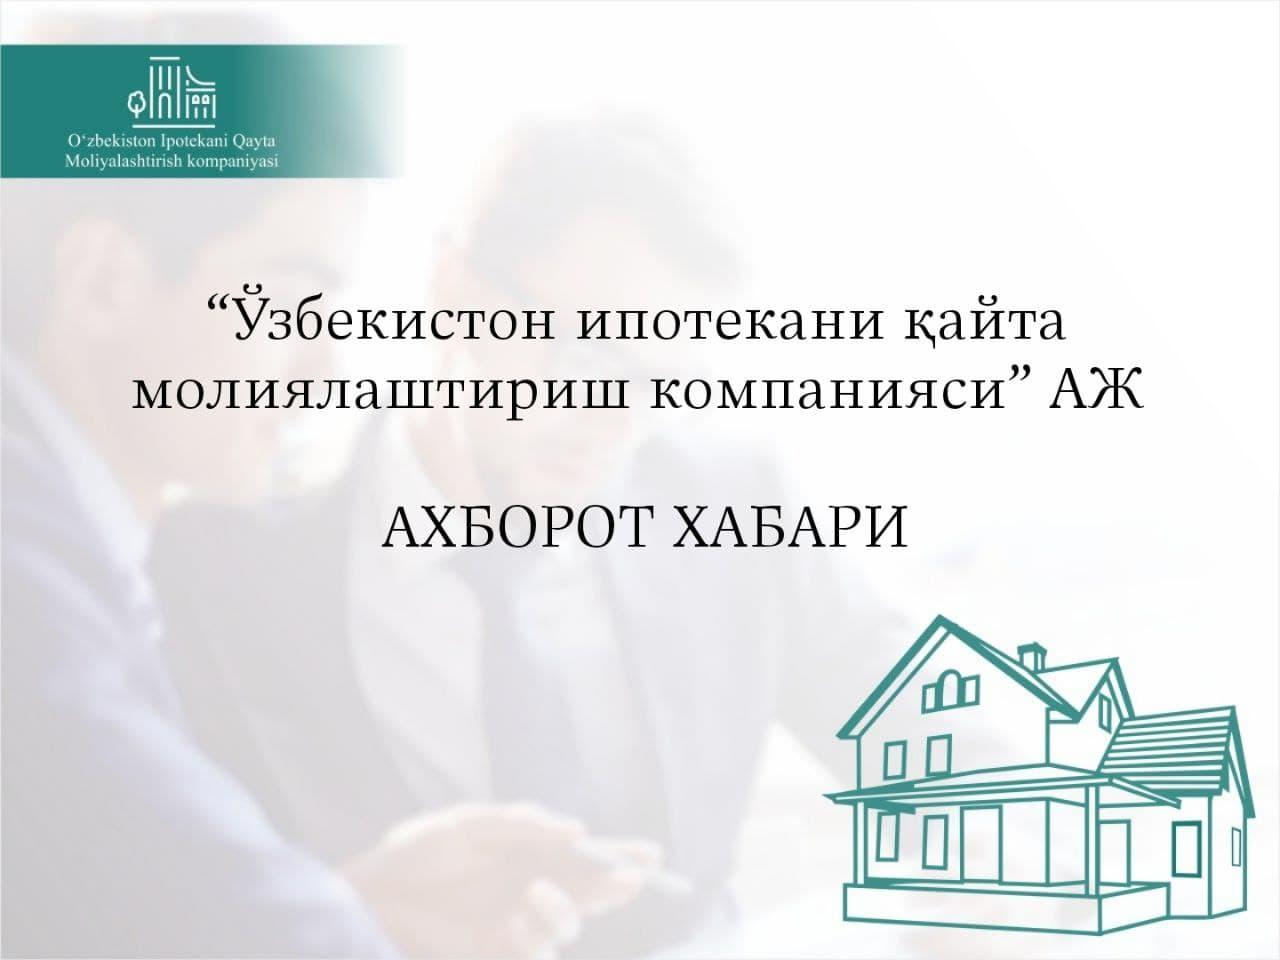 Information message of JSC "Mortgage Refinancing Company of Uzbekistan"